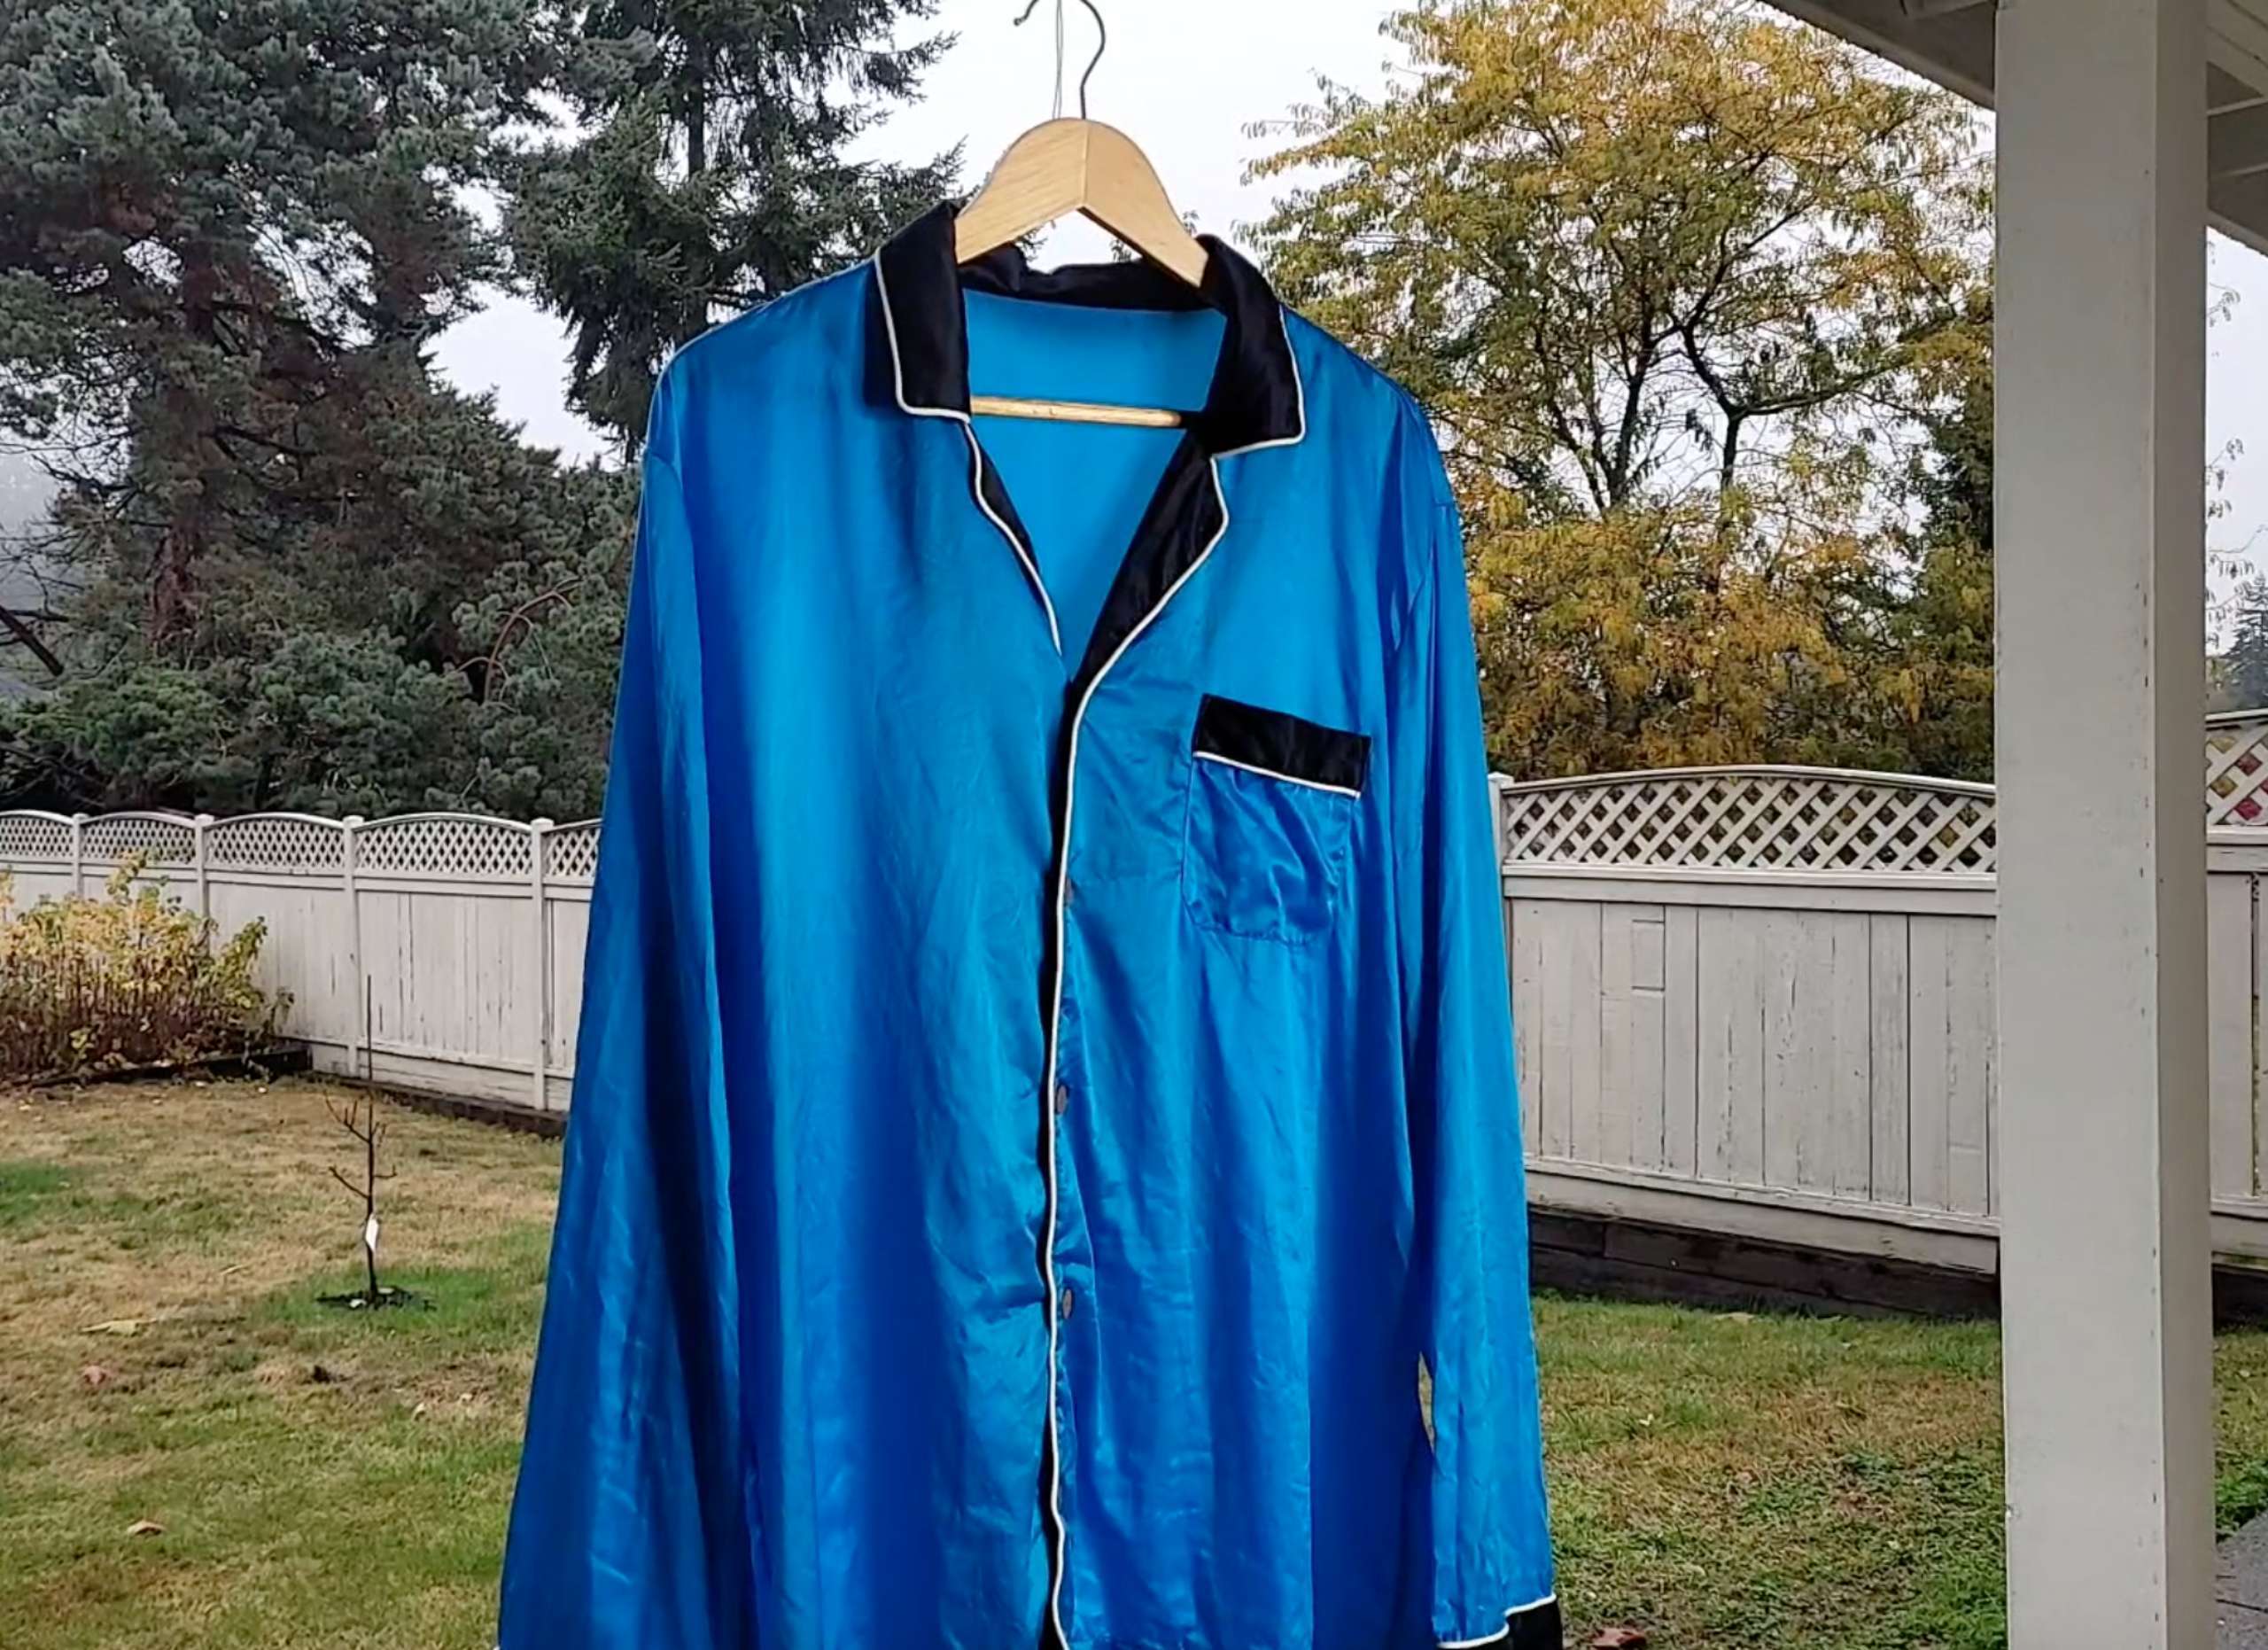 photo of a blue silk shirt air drying outside